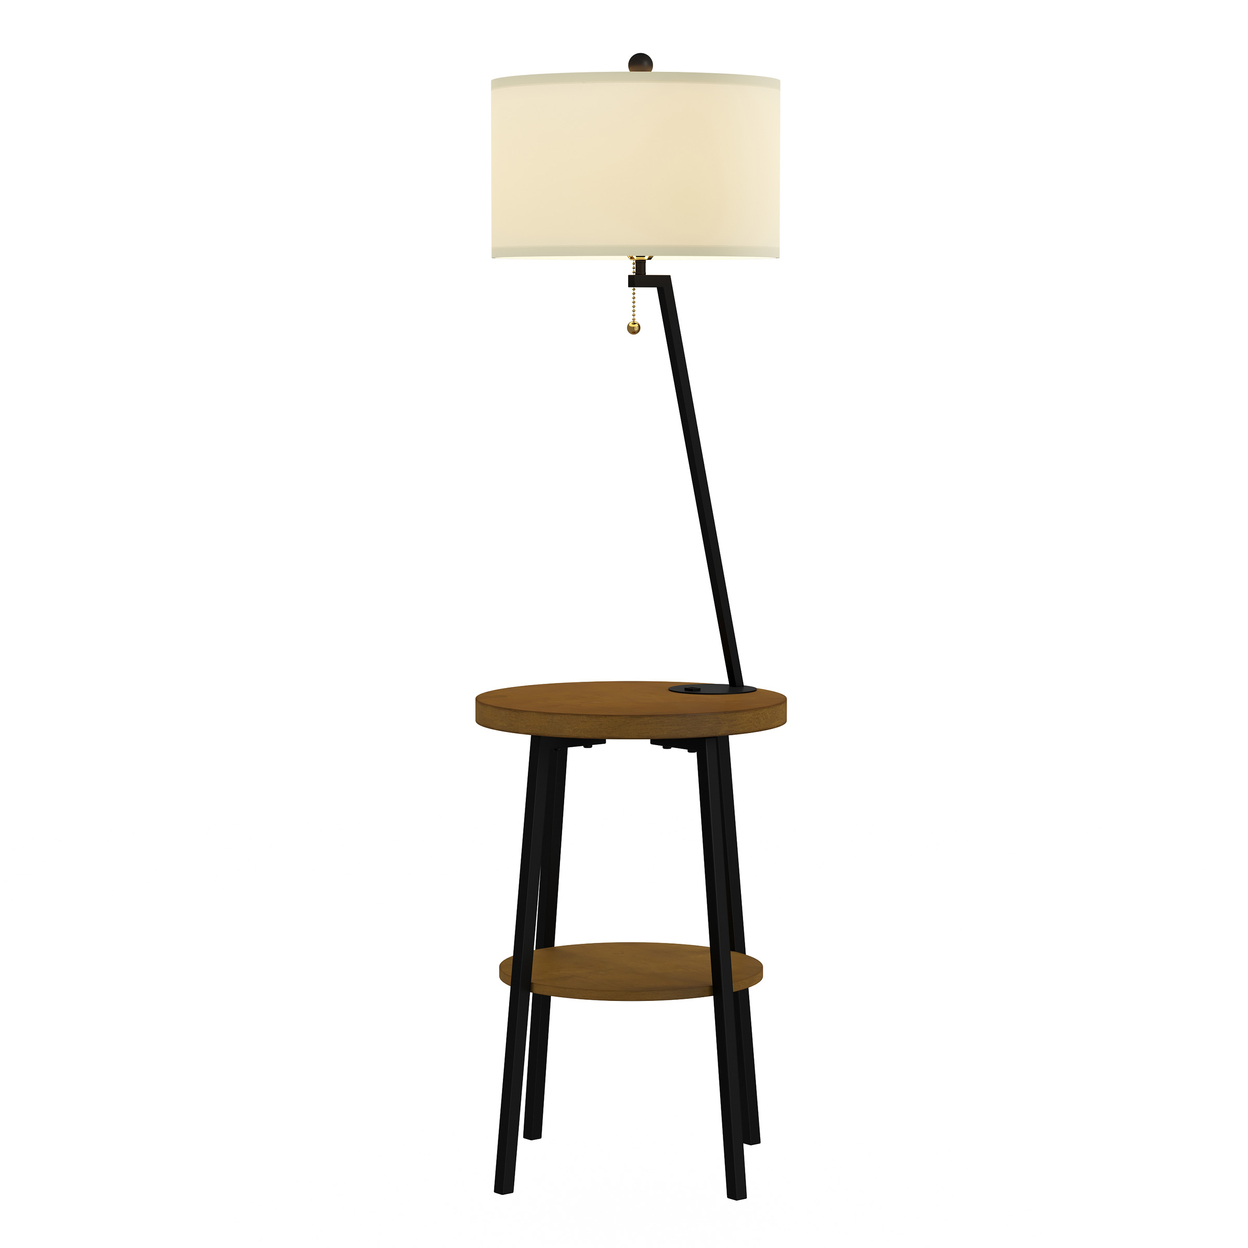 2 Shelf End Table Floor Lamp Metal Legs Light USB Charging Port Bed Side Decor